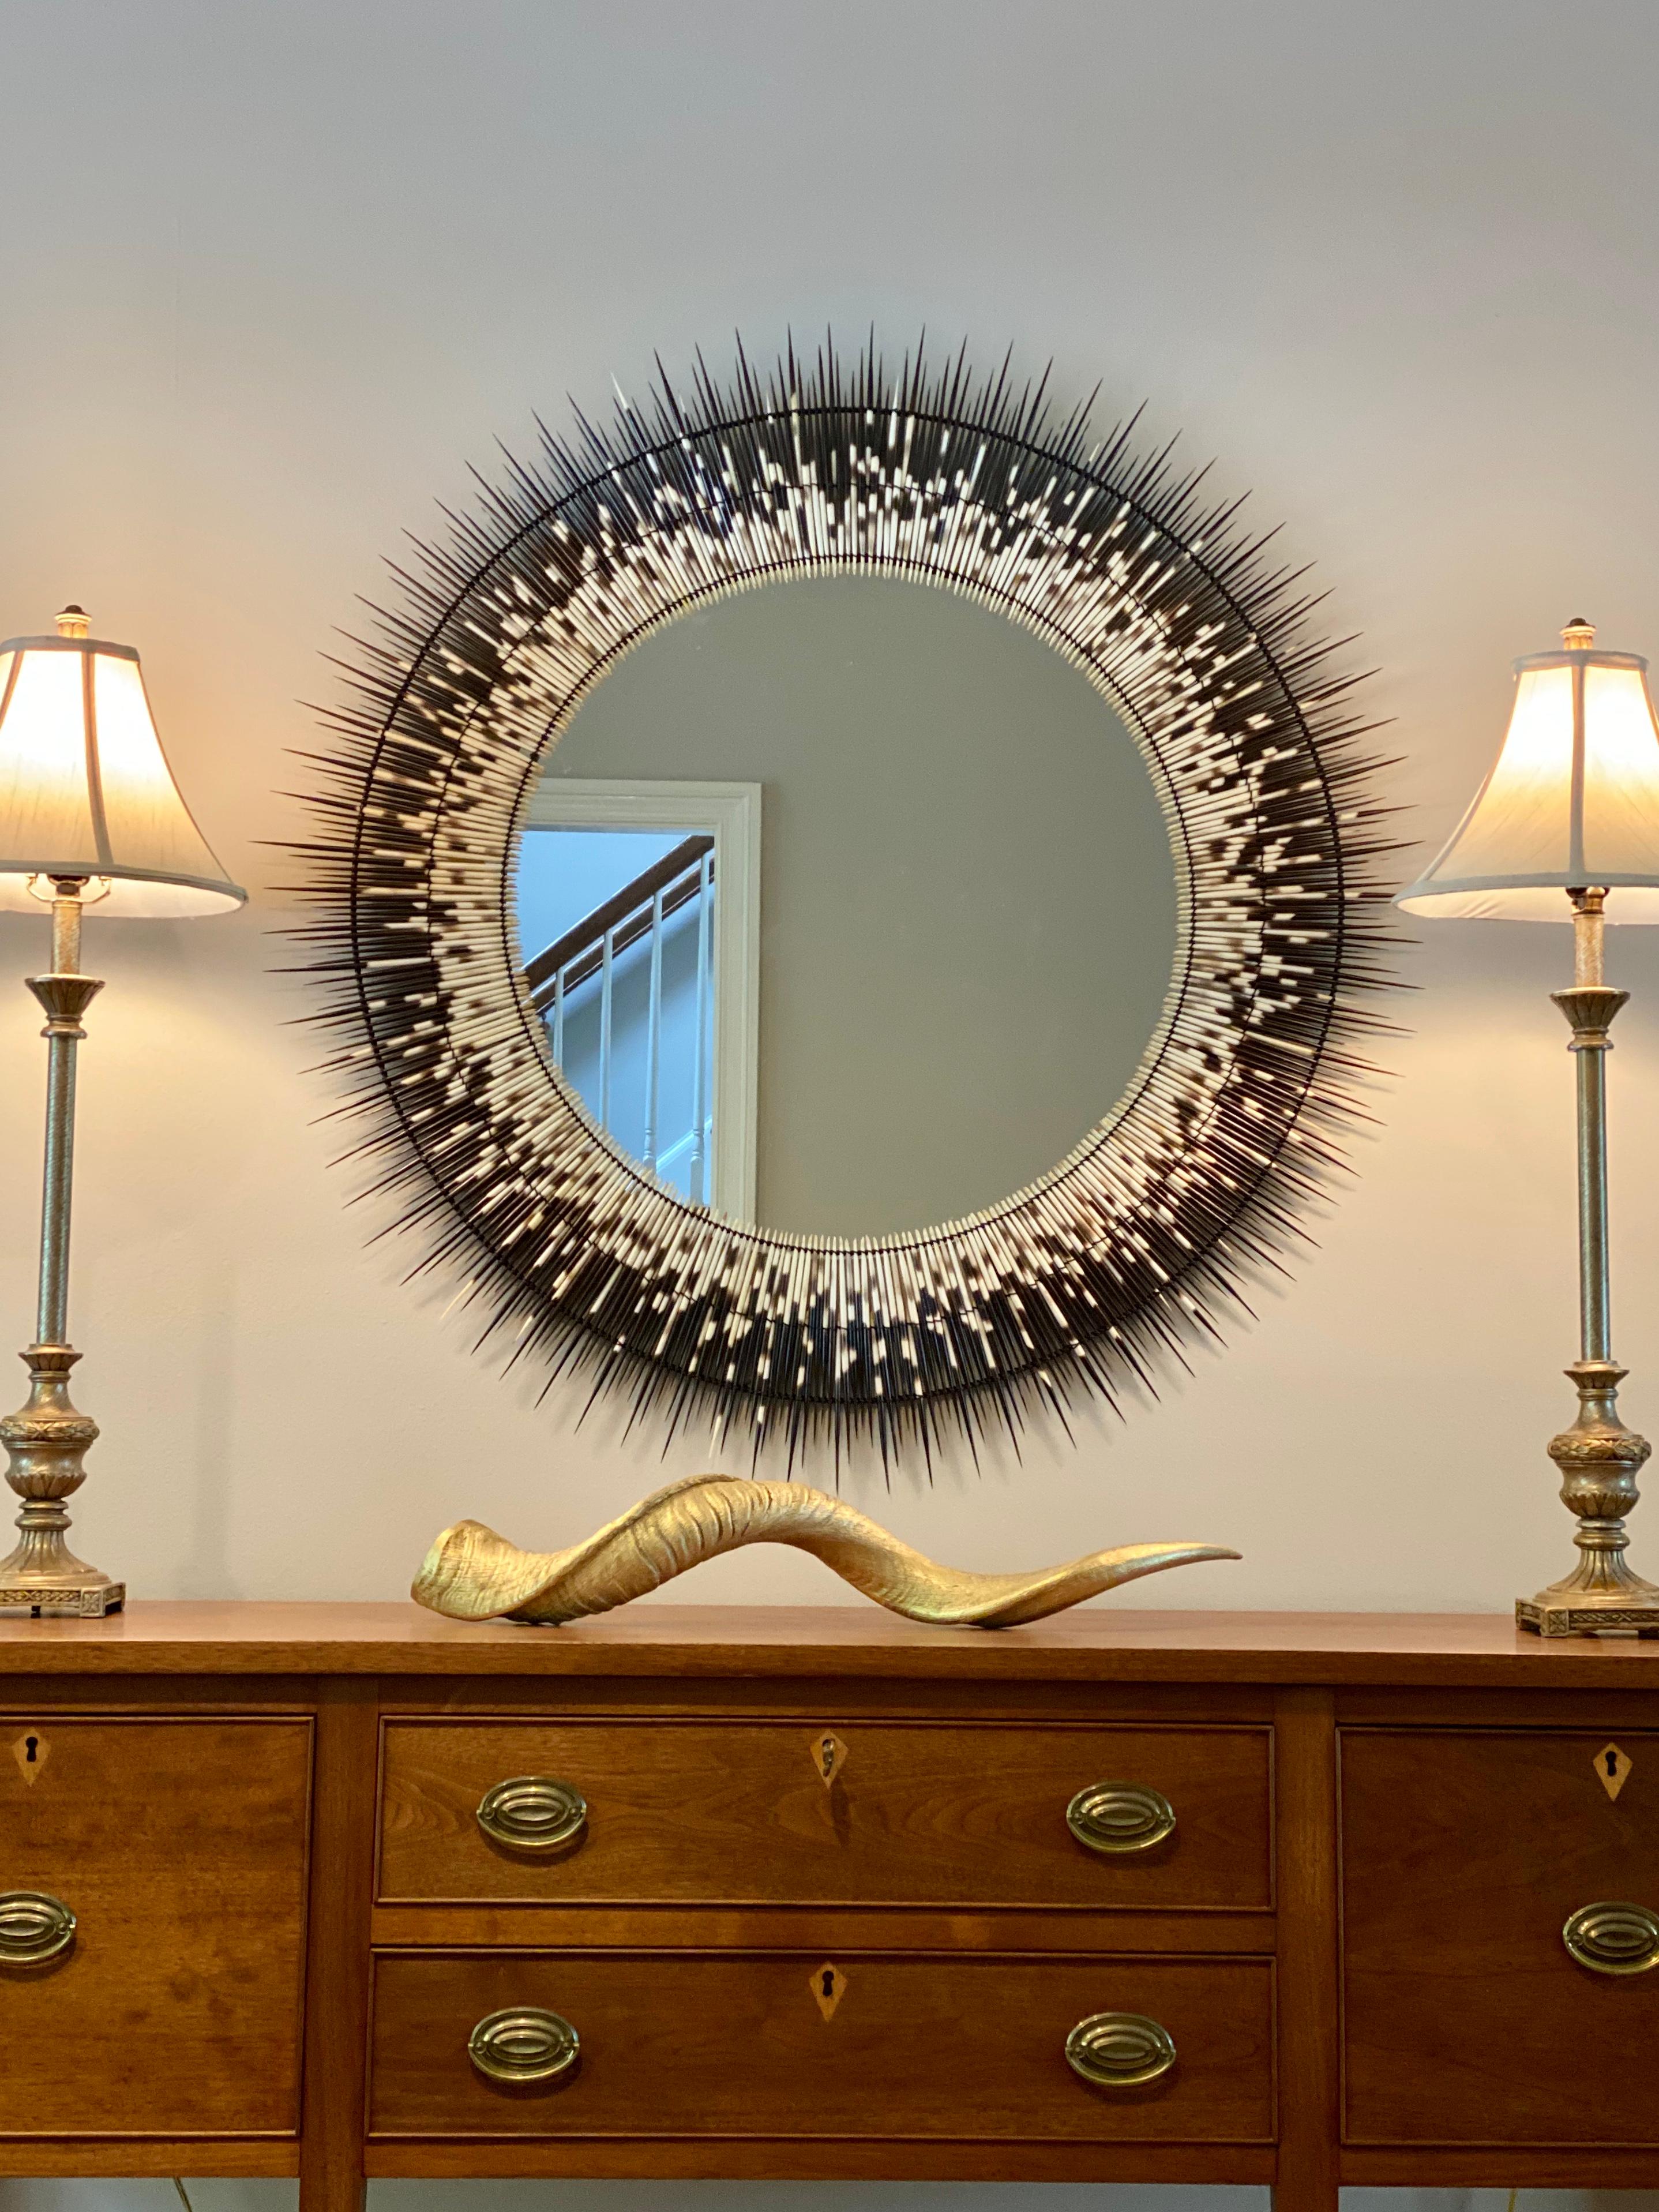 porcupine quill mirror